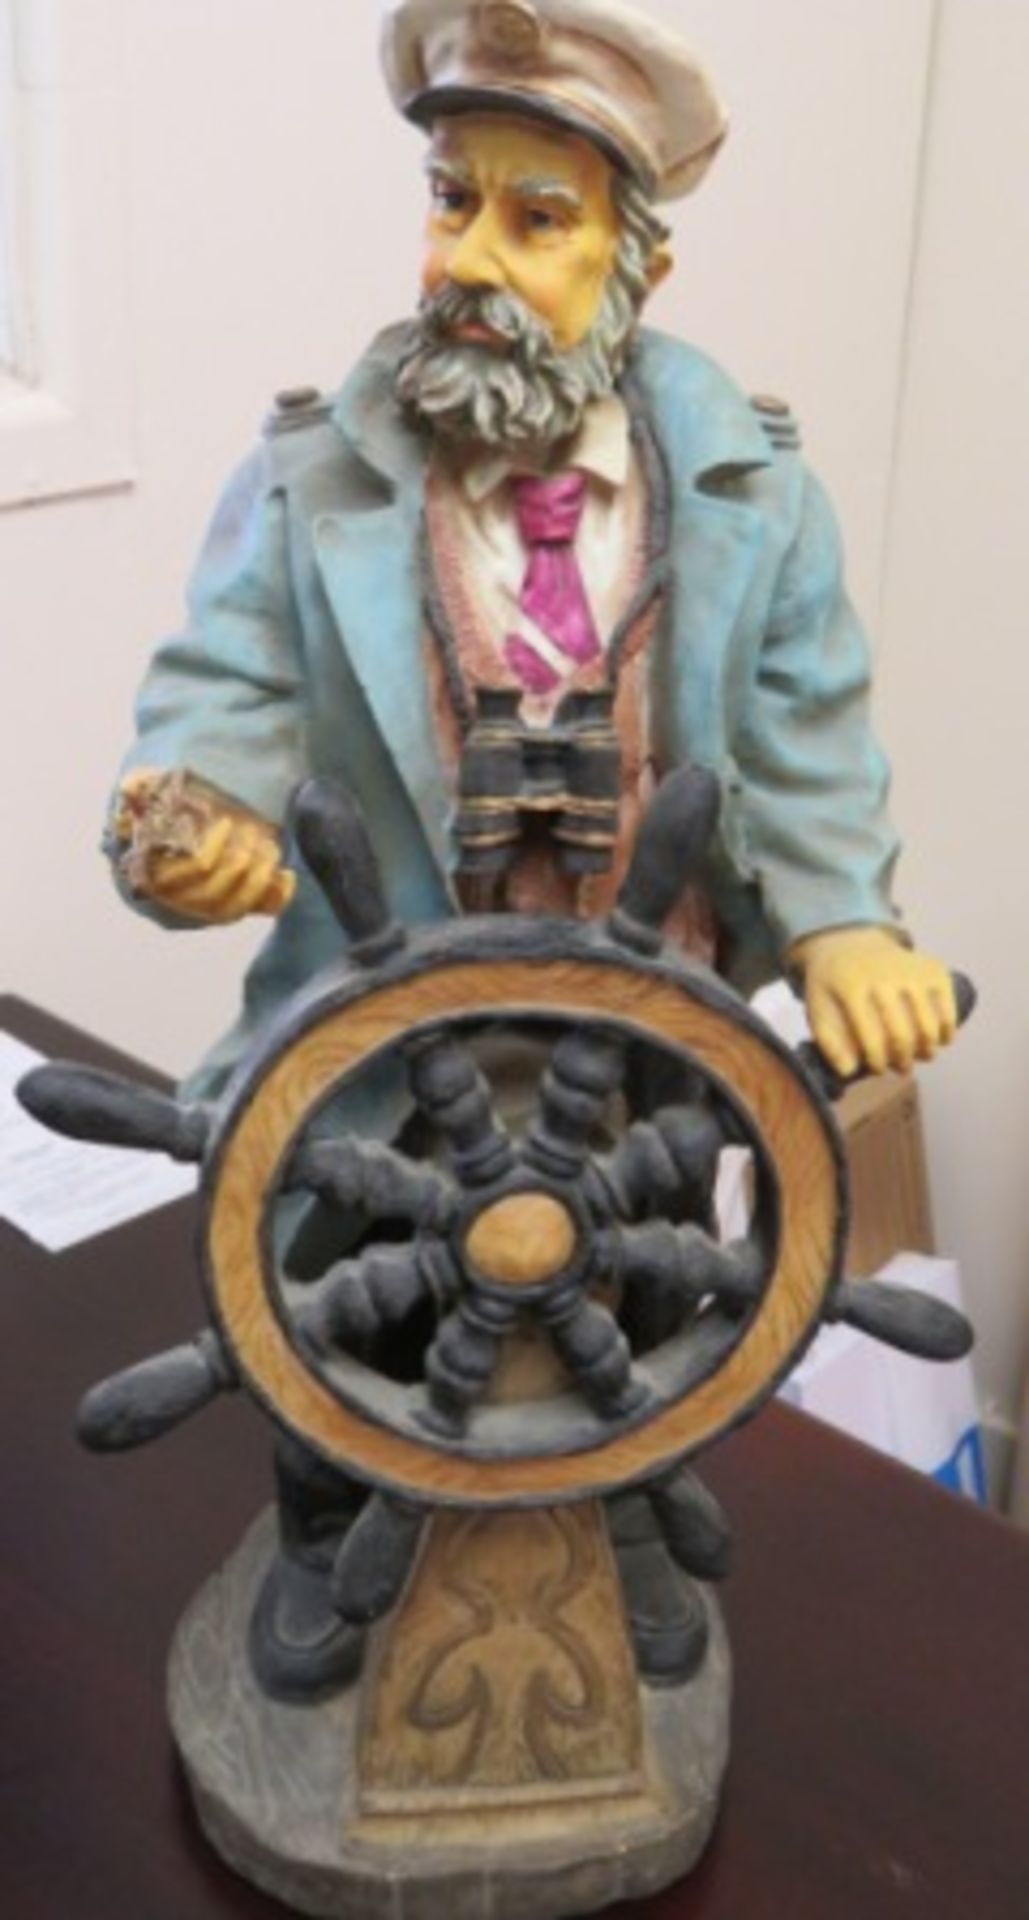 Merchant Sea Man Ship's Captain Figurine